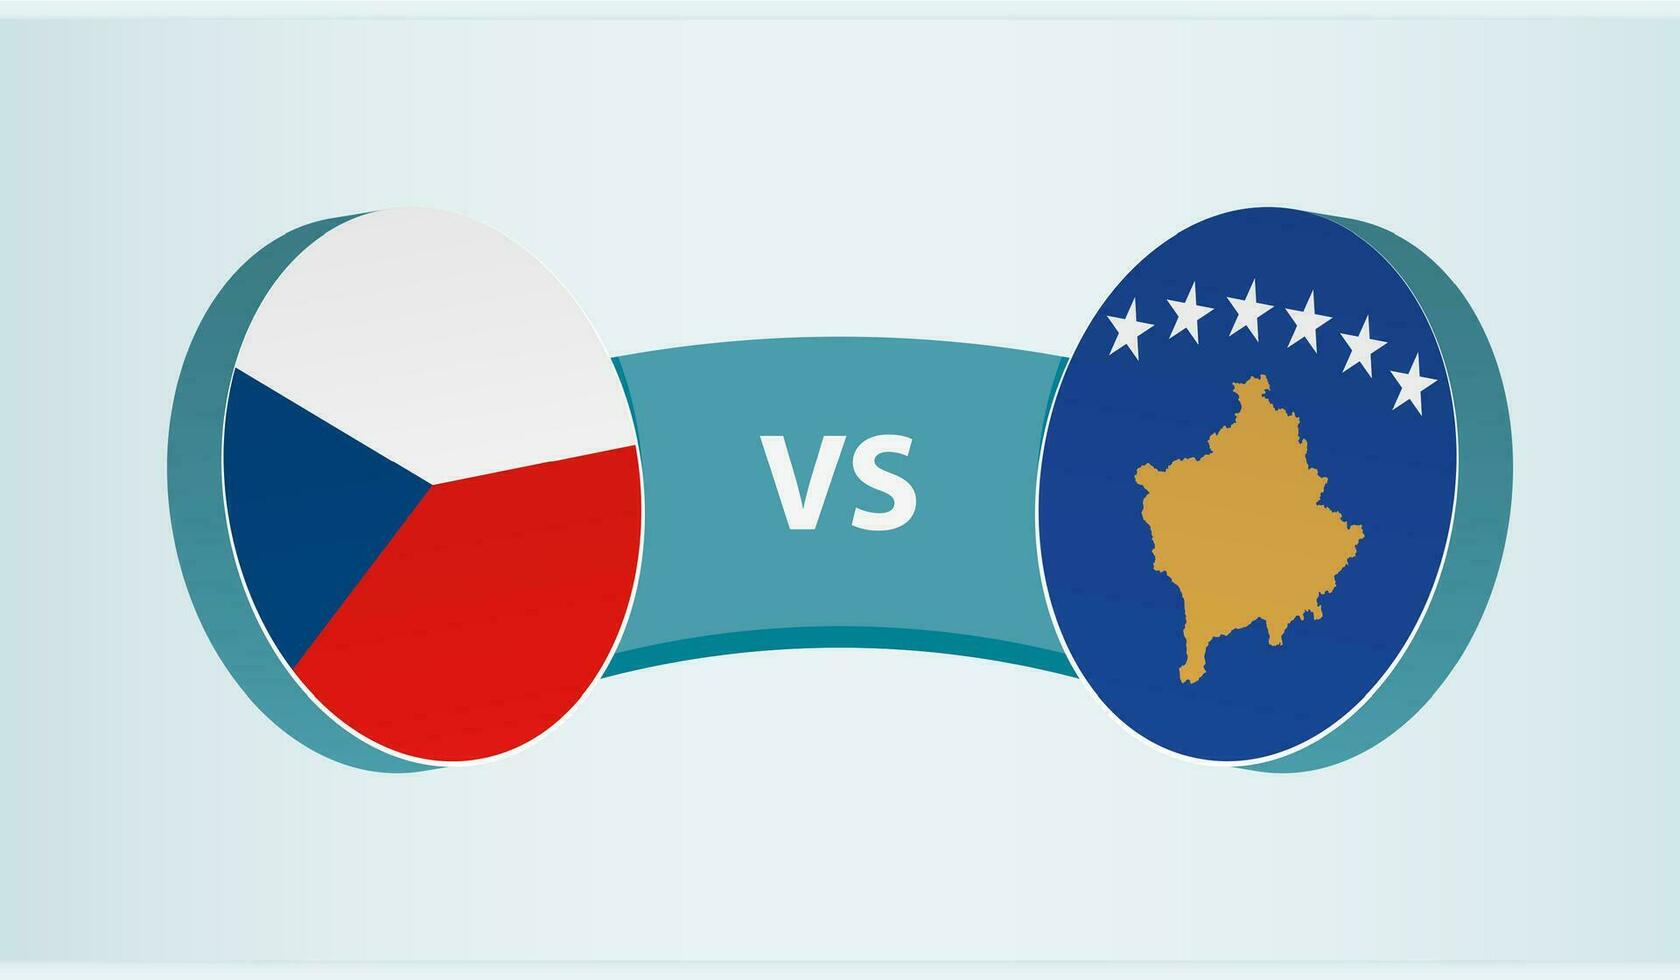 tcheco república versus Kosovo, equipe Esportes concorrência conceito. vetor